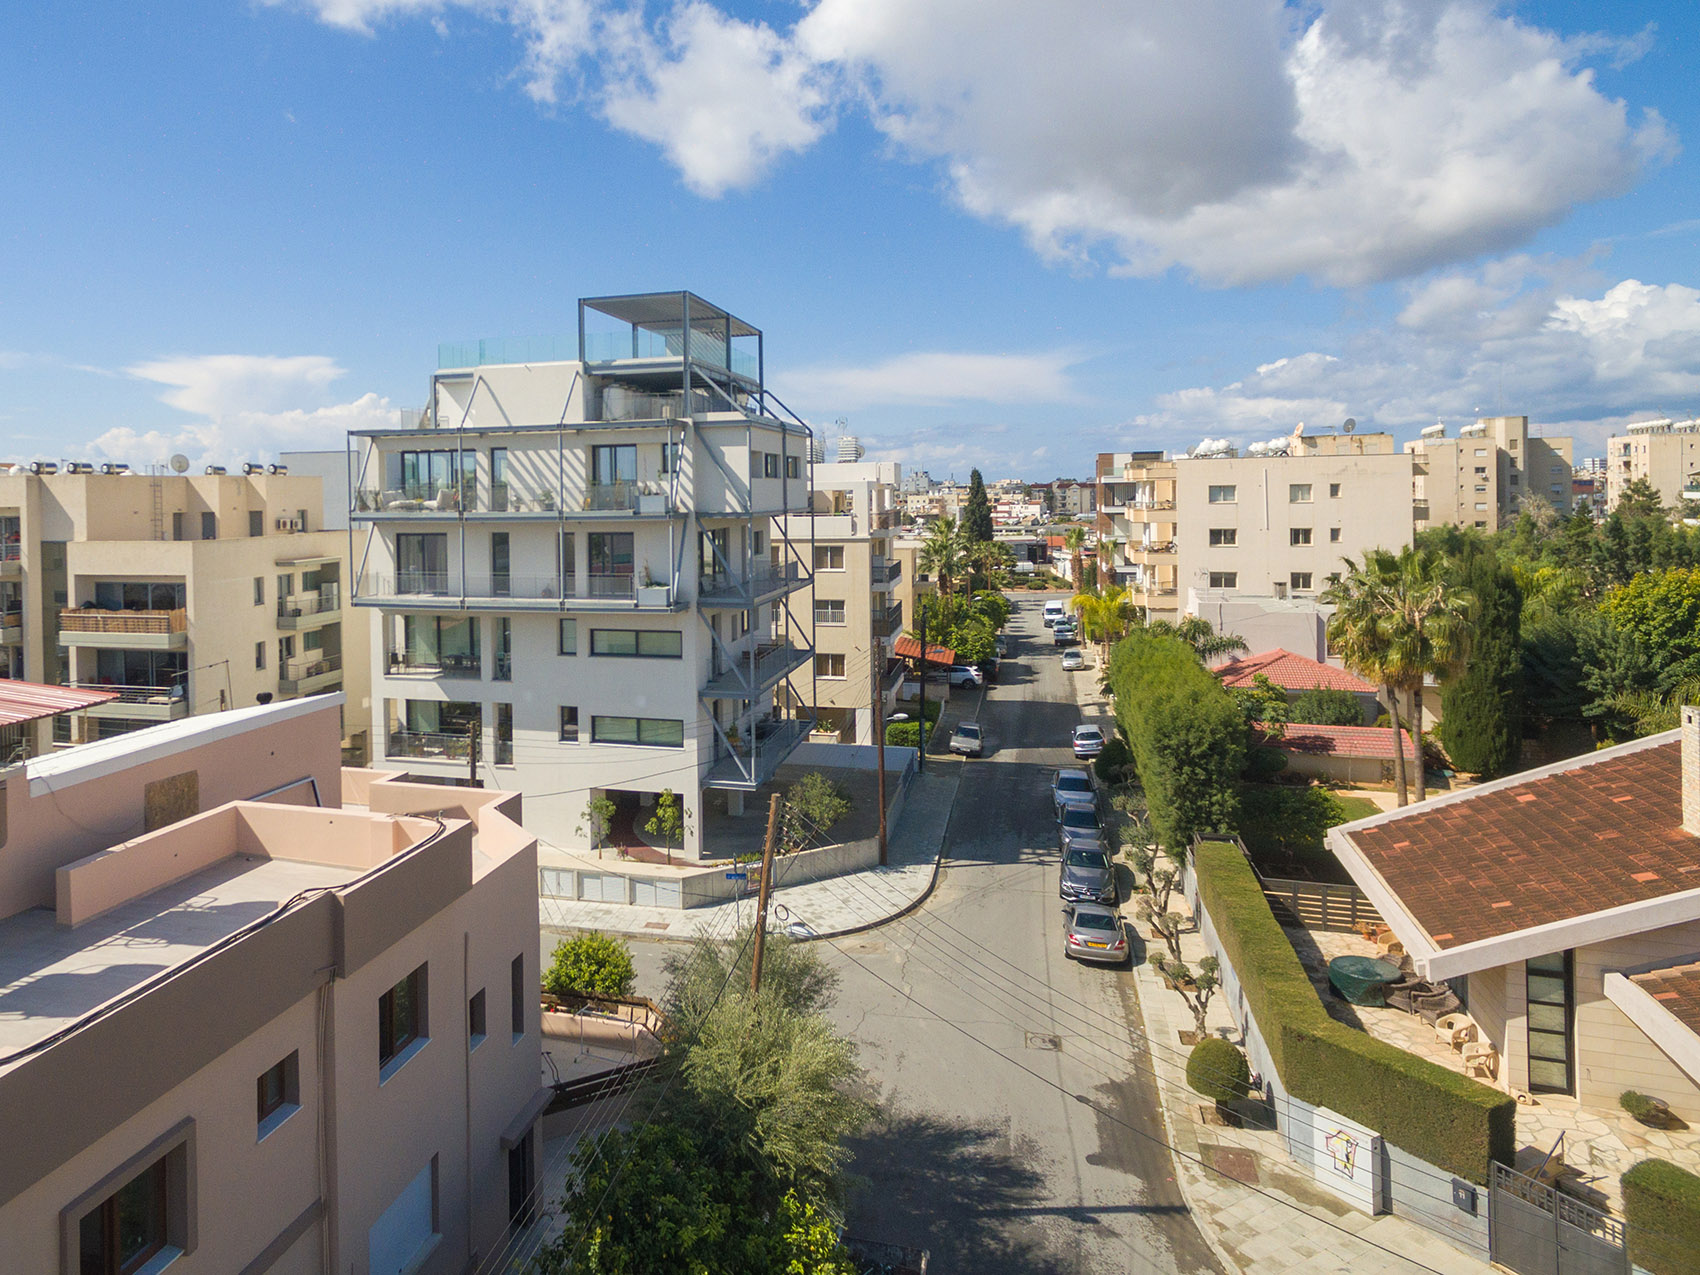 ZIO公寓楼，塞浦路斯/在创造愉快的生活体验的同时优化施工、节约材料和能源-3